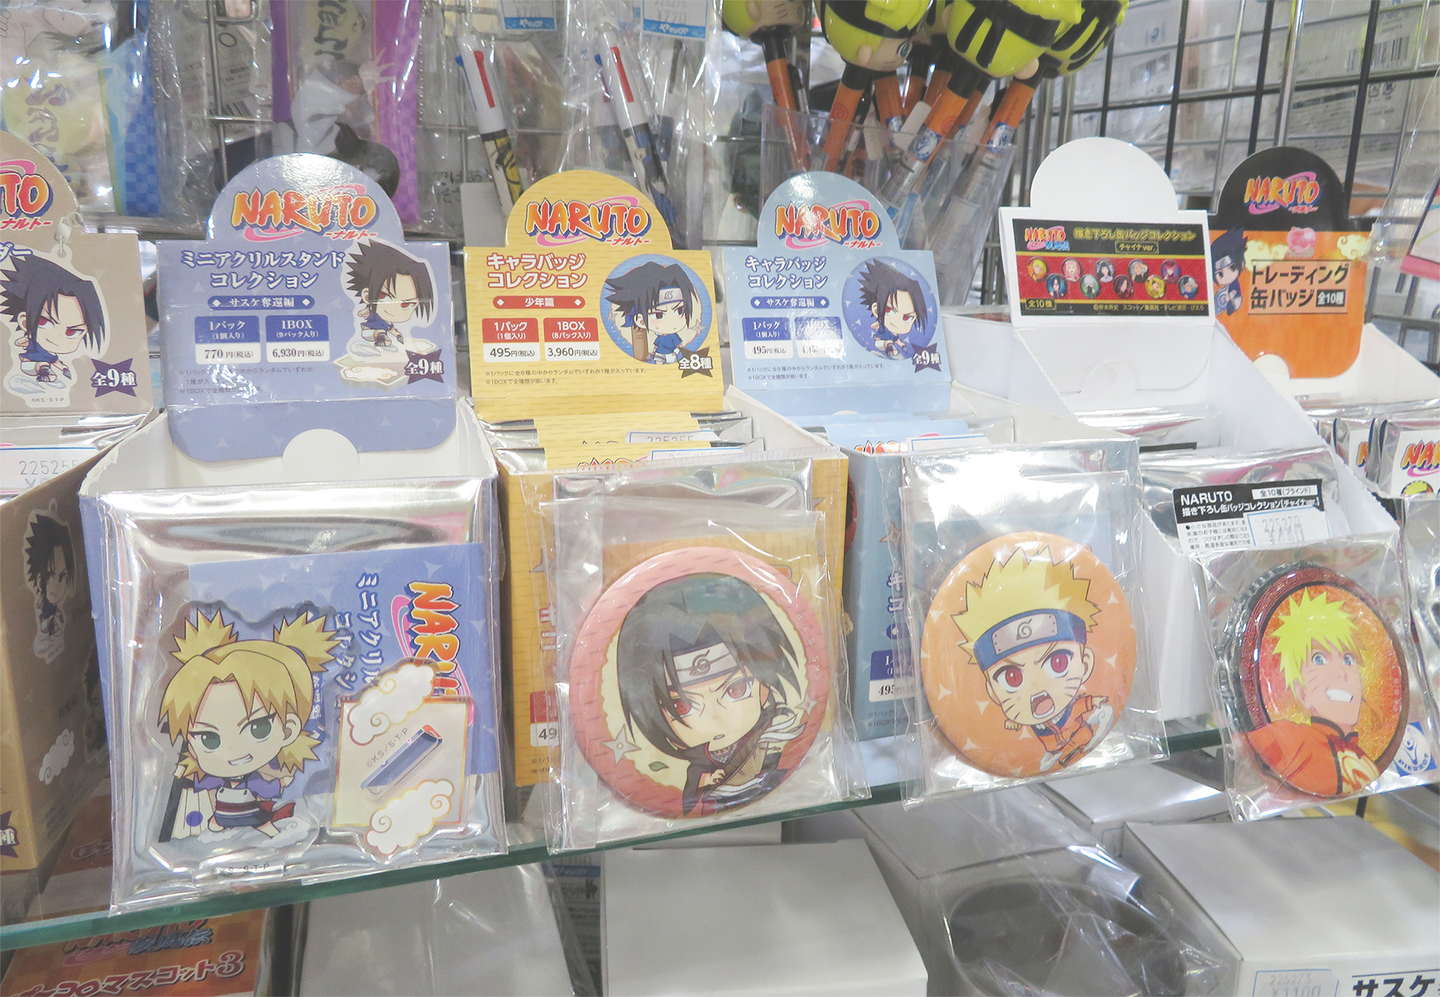 Images of NARUTO merchandise sold at YAMASHIROYA3